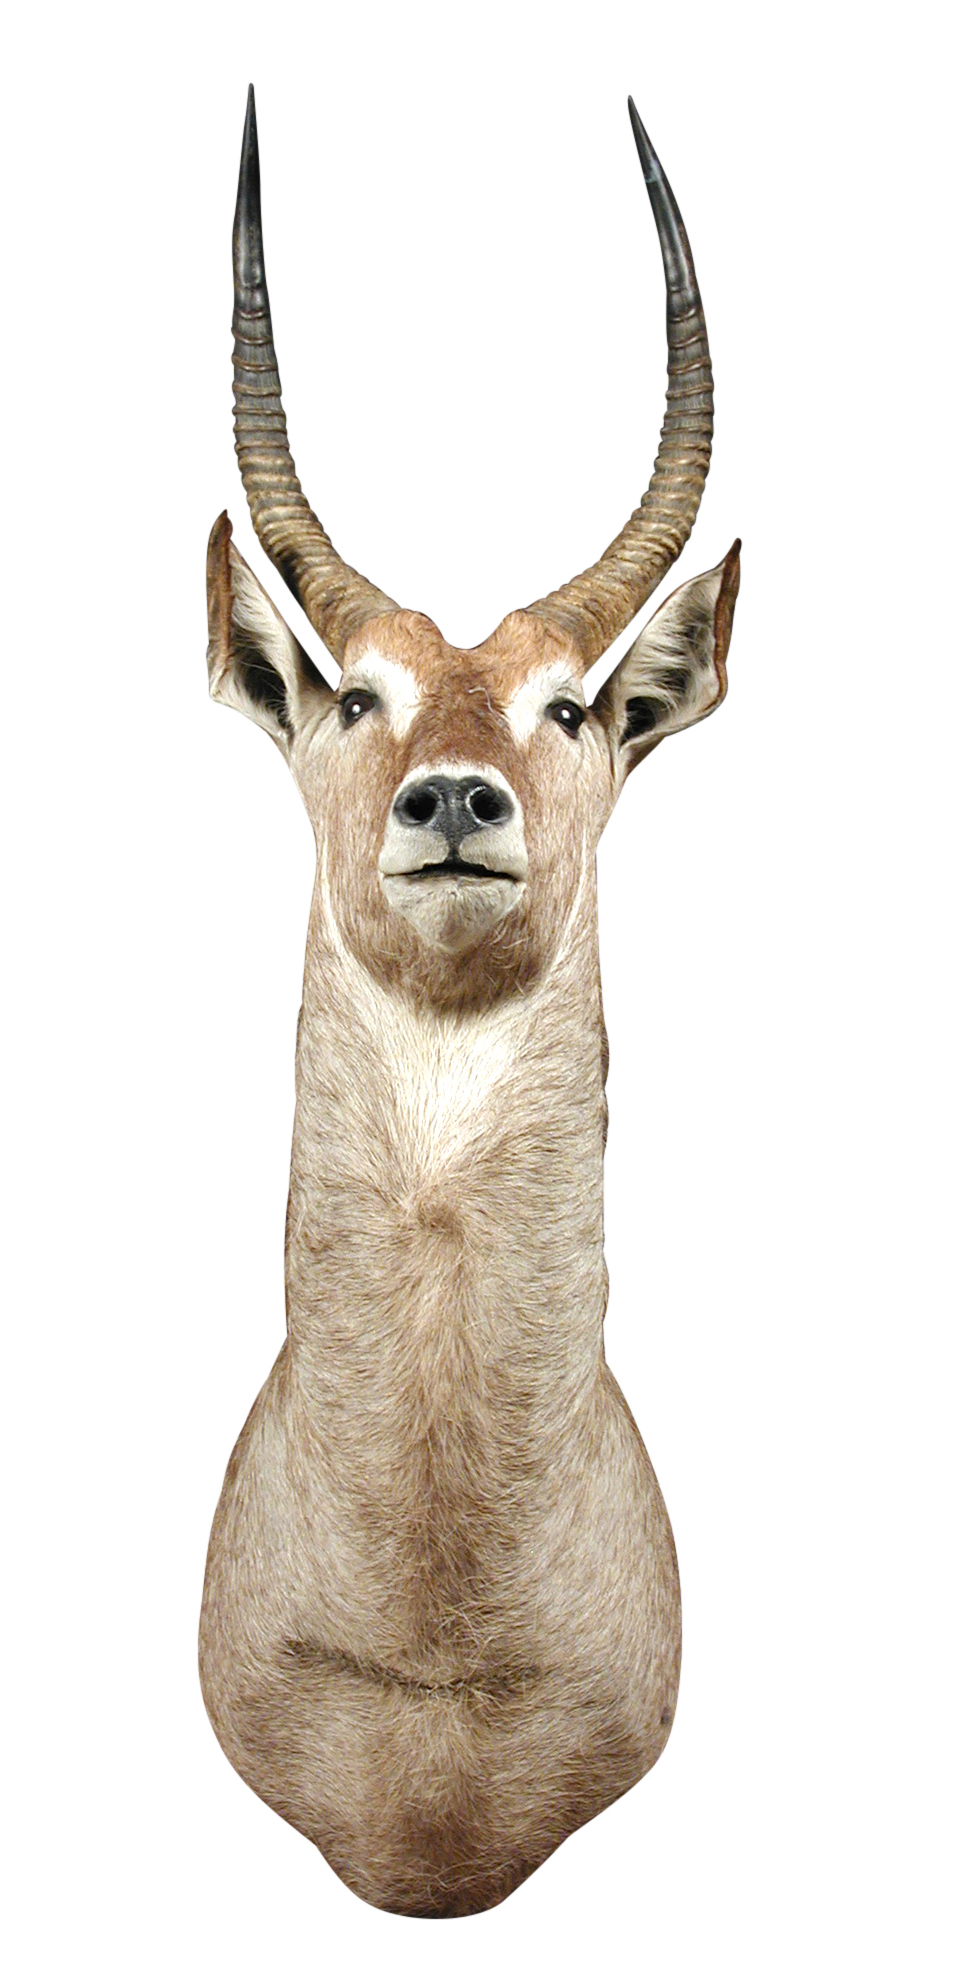 Defassa waterbuck (Kobus defassa), a modern neck mount, the antlers approximately 54cm